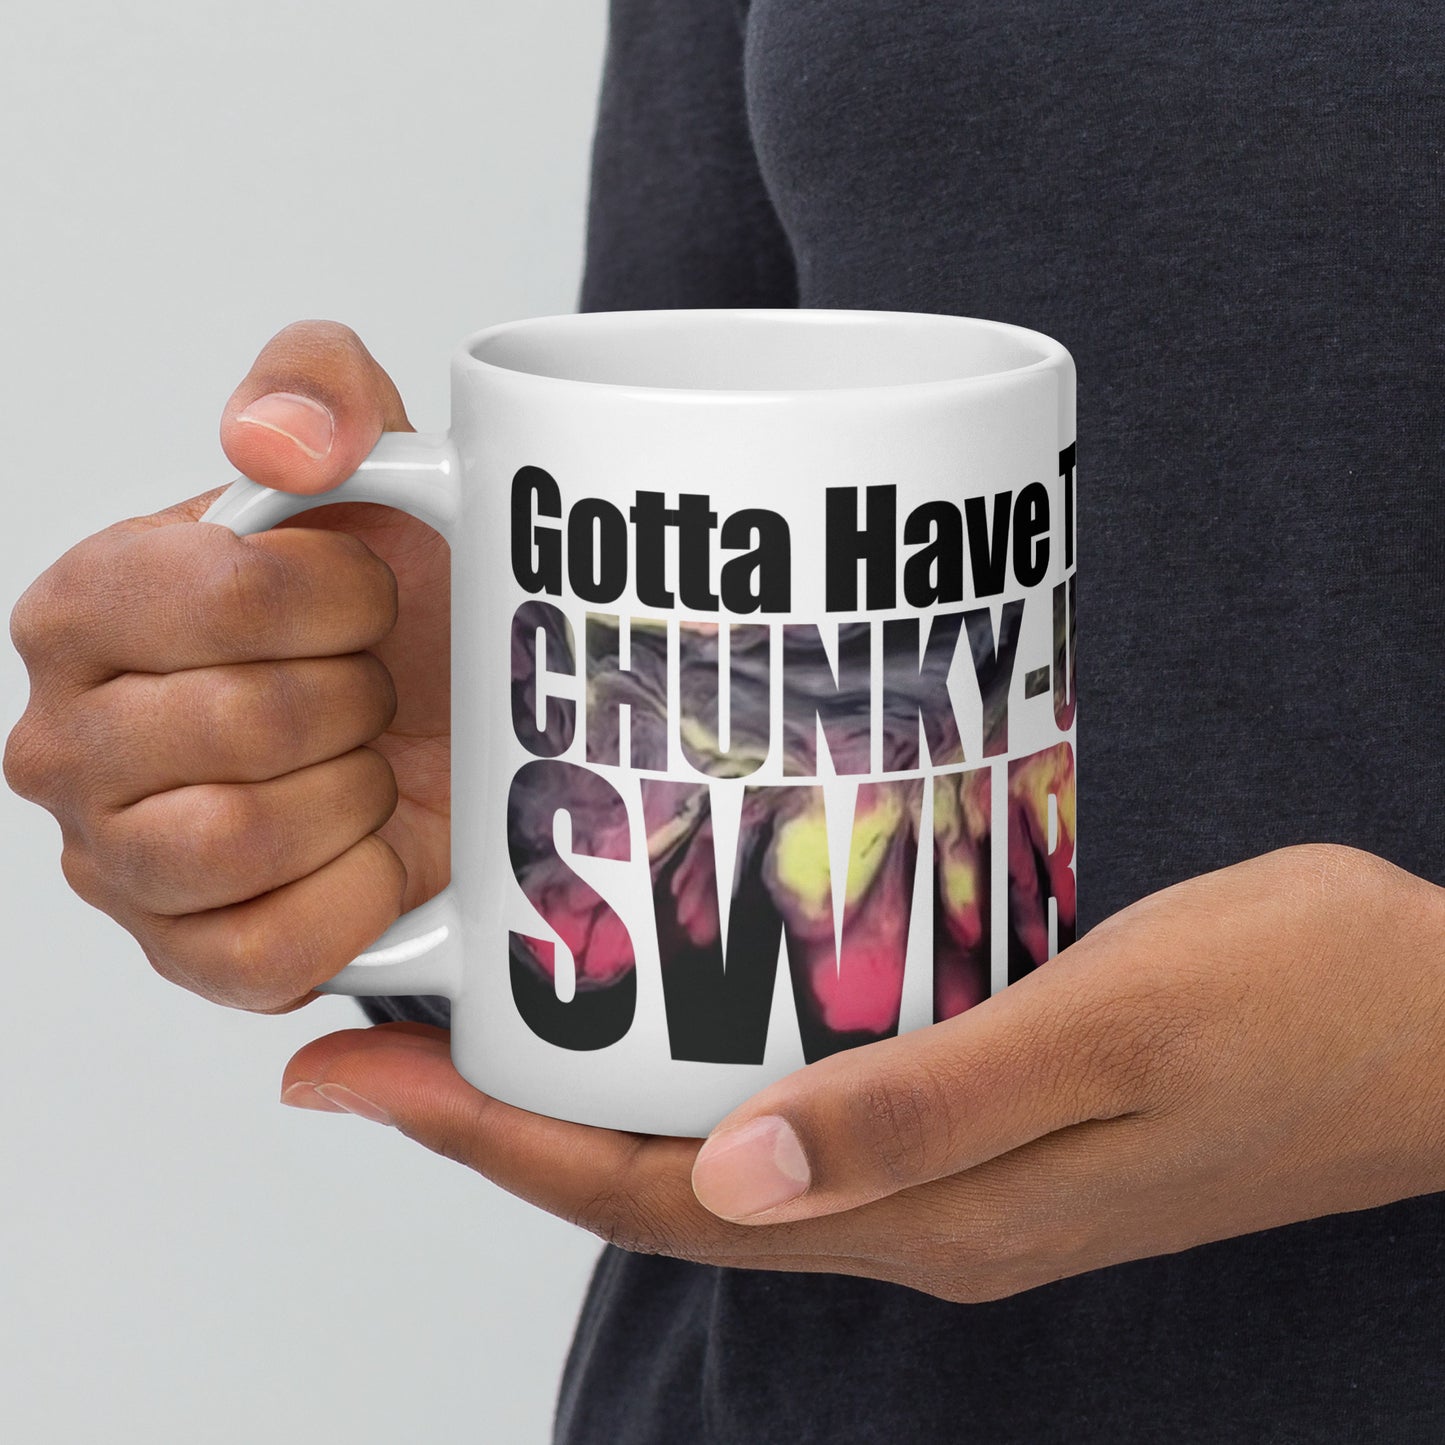 Chunky-Unky Swirls Mug